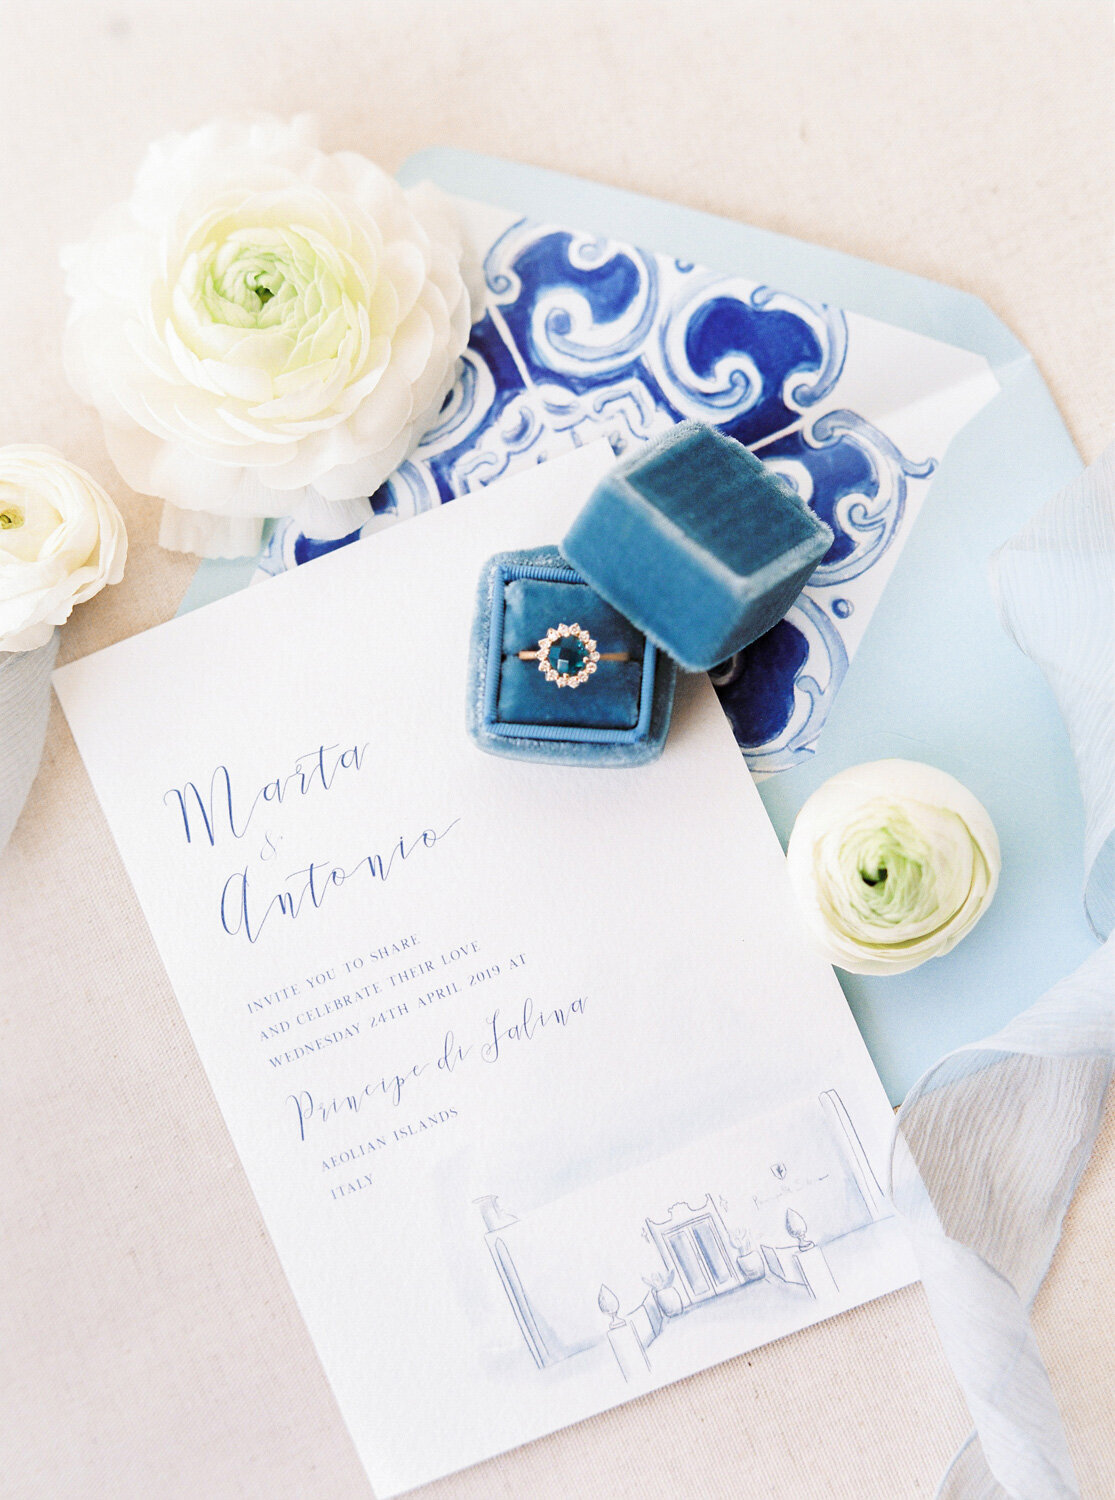 Wedding invitations by Auca Design